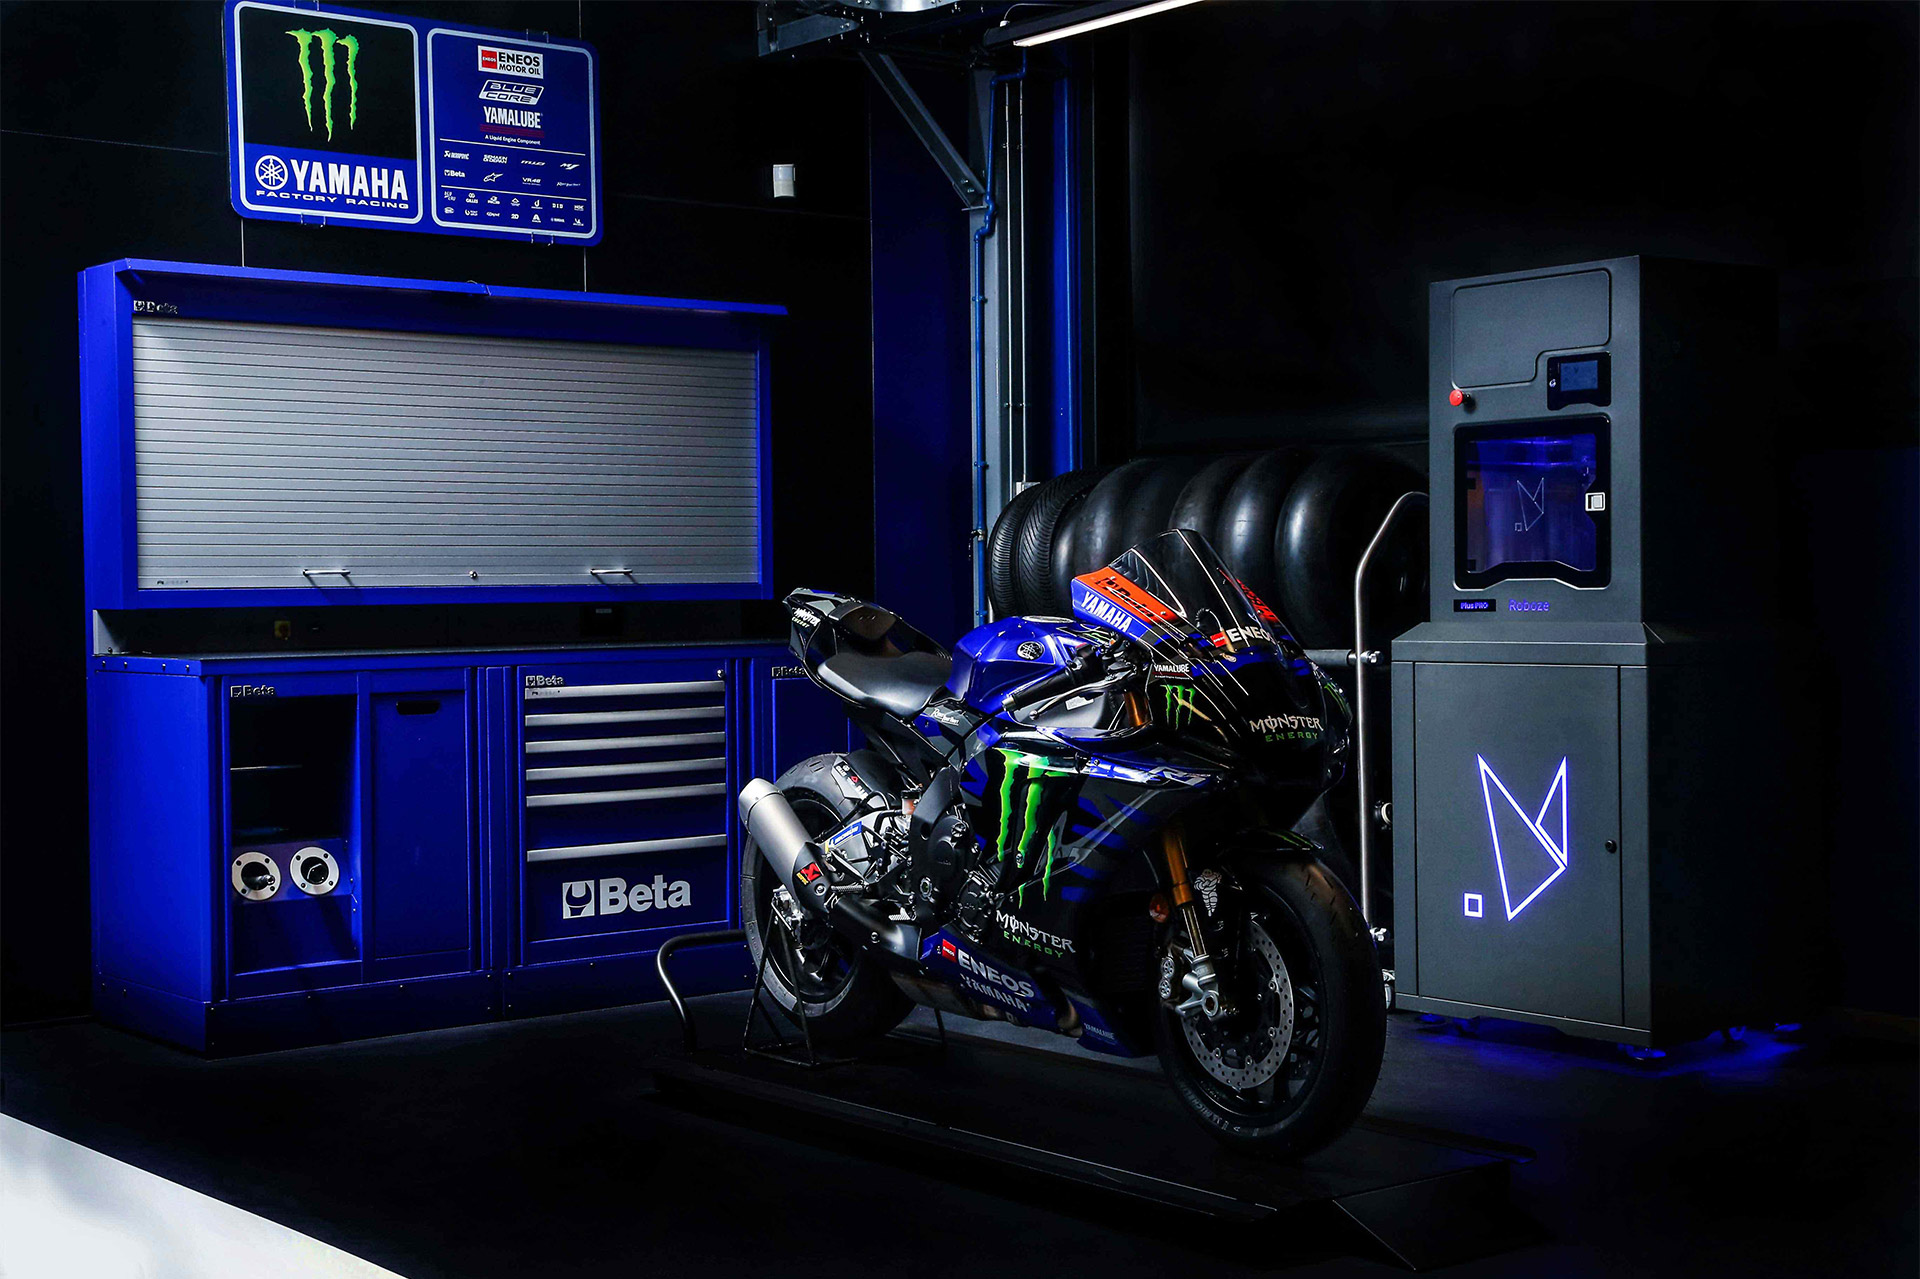 Roboze Is Official Partner Of The Monster Energy Yamaha Motogp Team